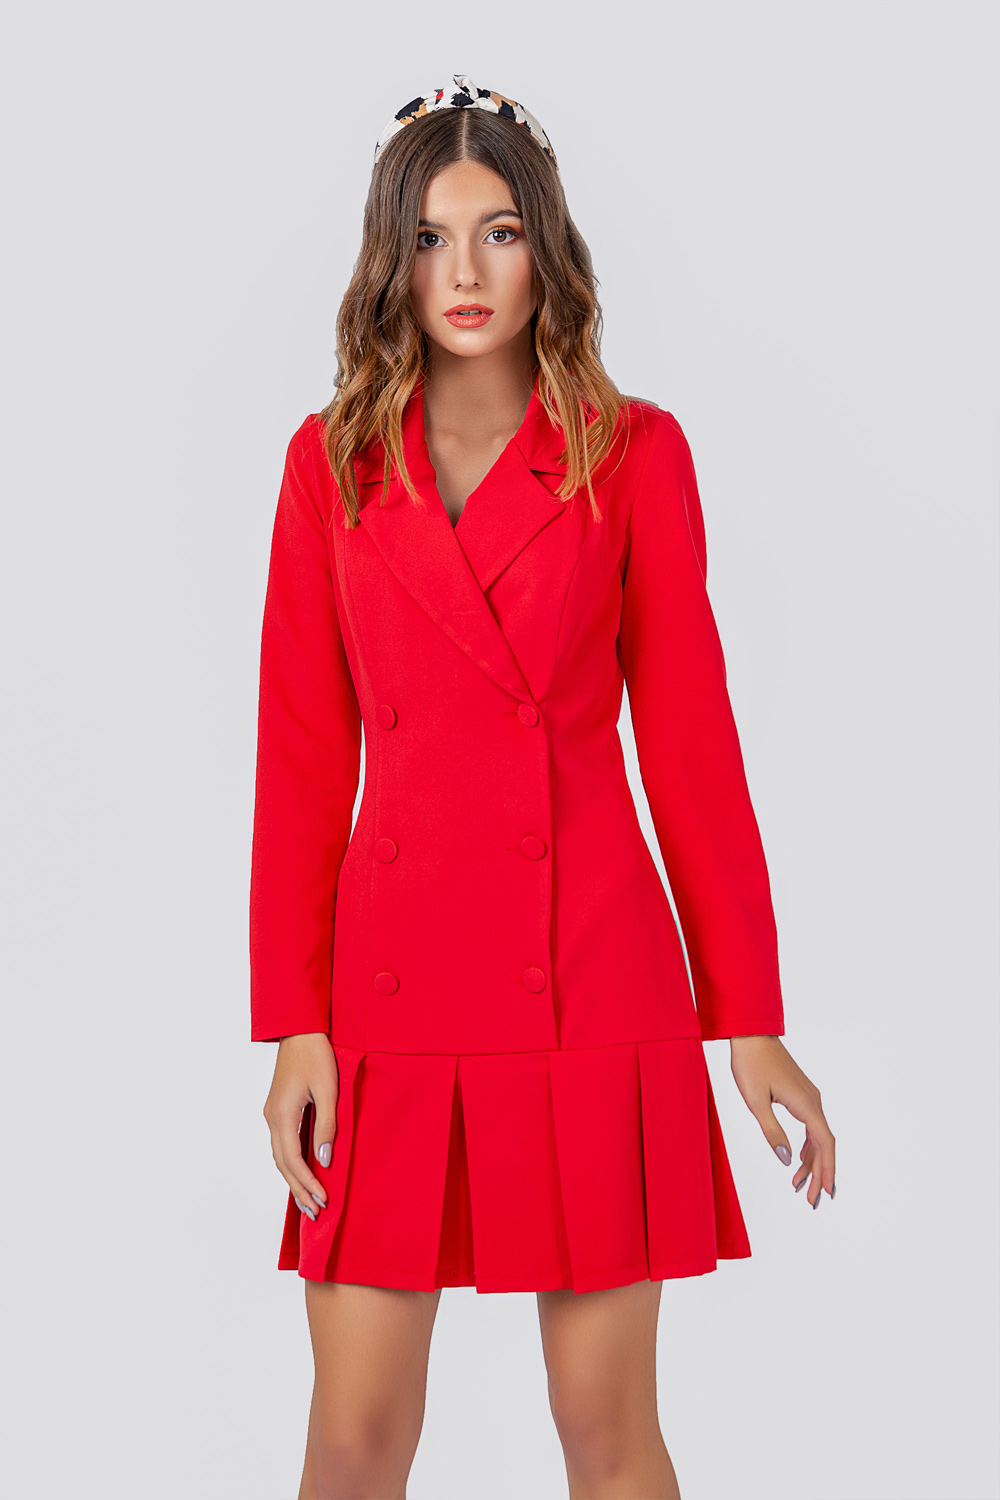 Red buttoned blazer dress